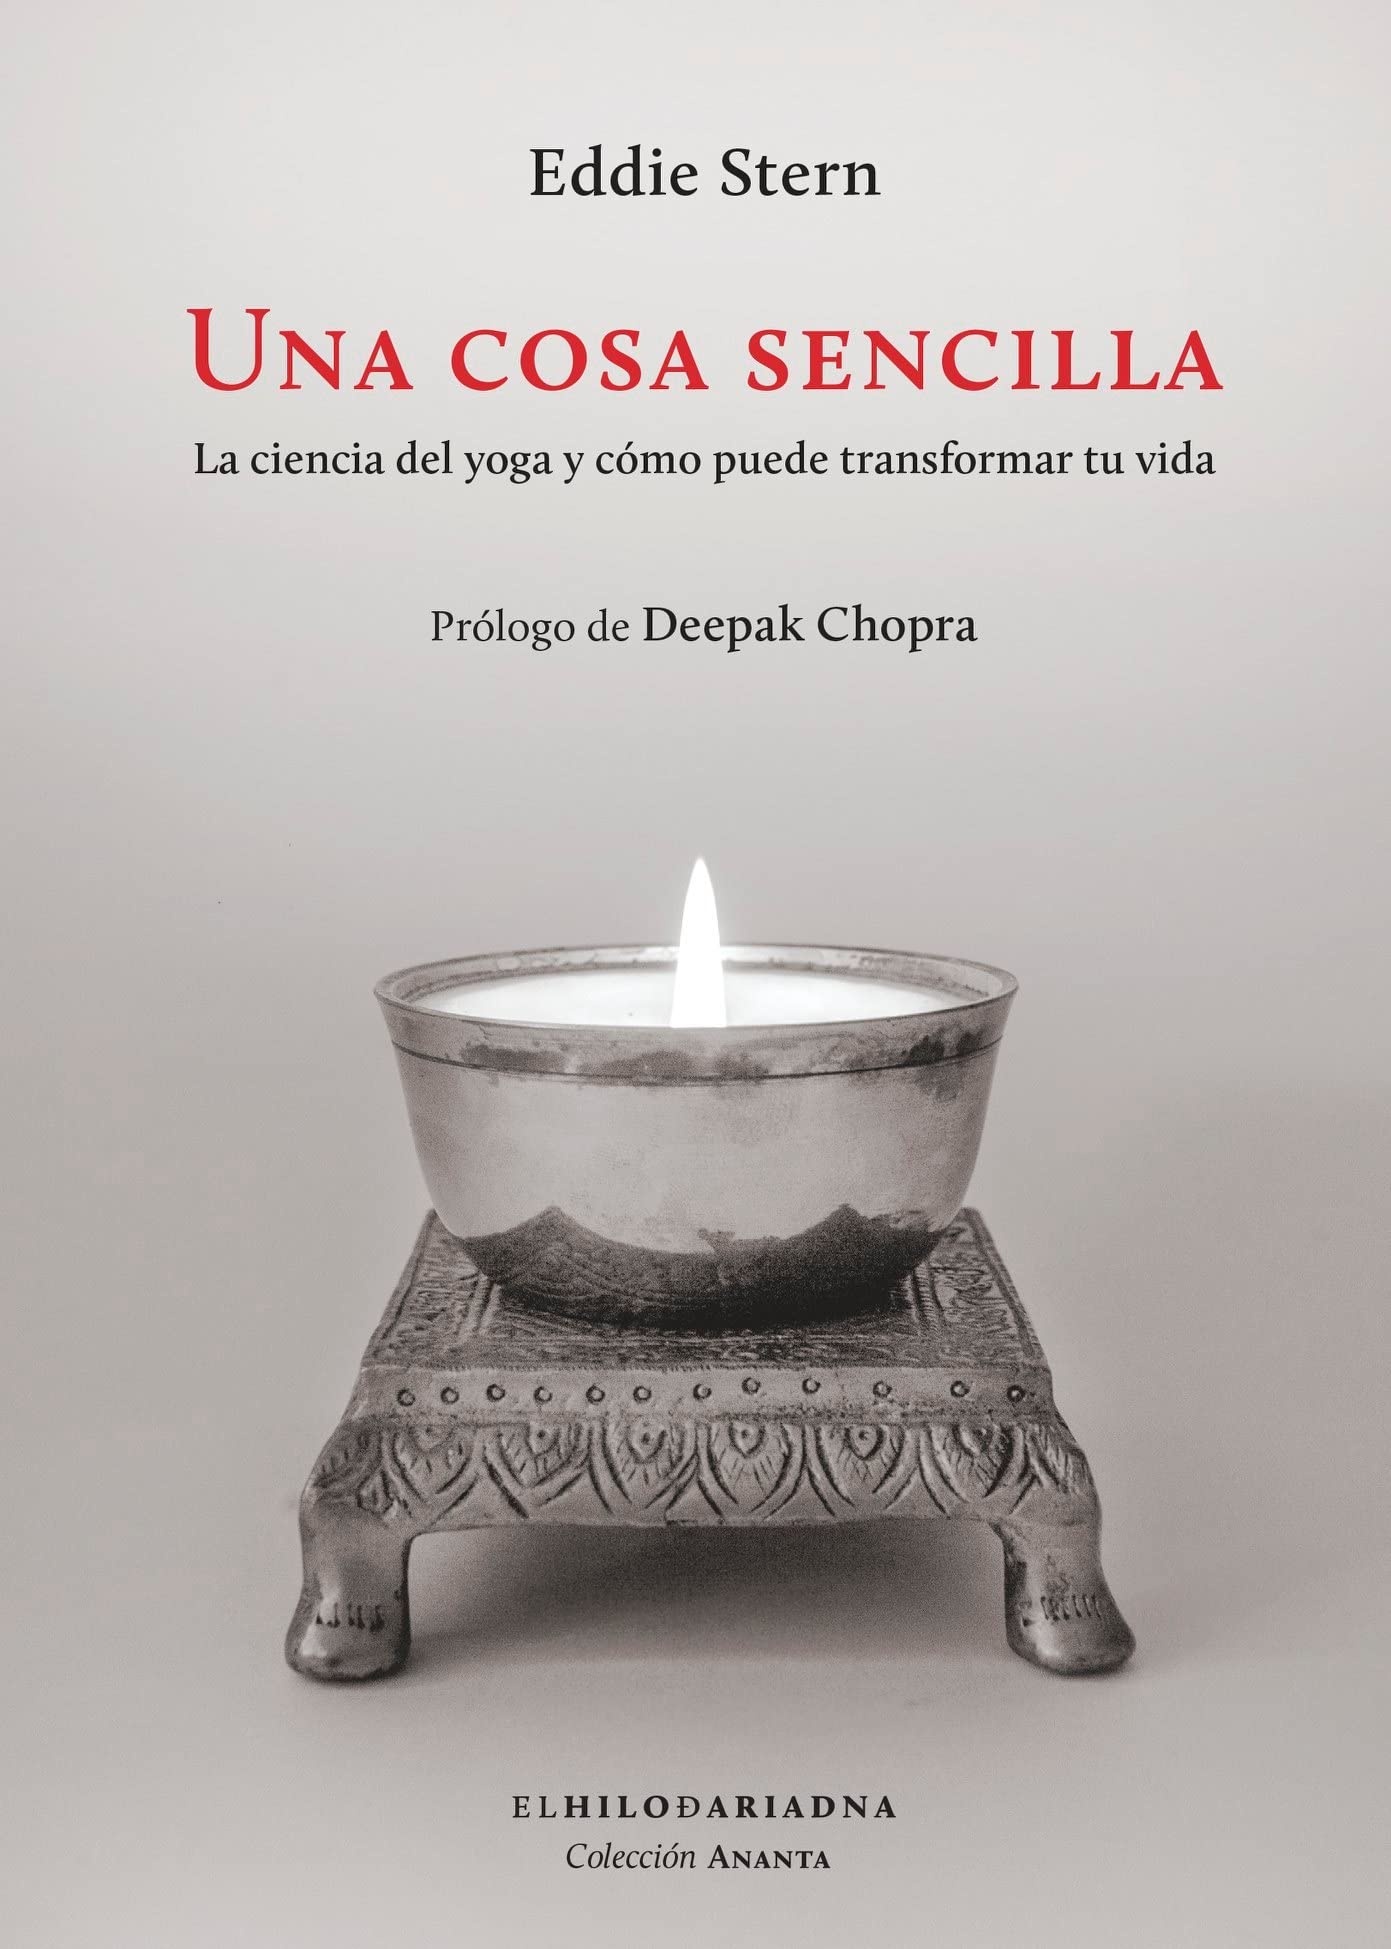 Yoga fácil en casa (Spanish Edition): Dorda, Begoña: 9788430547517:  : Books